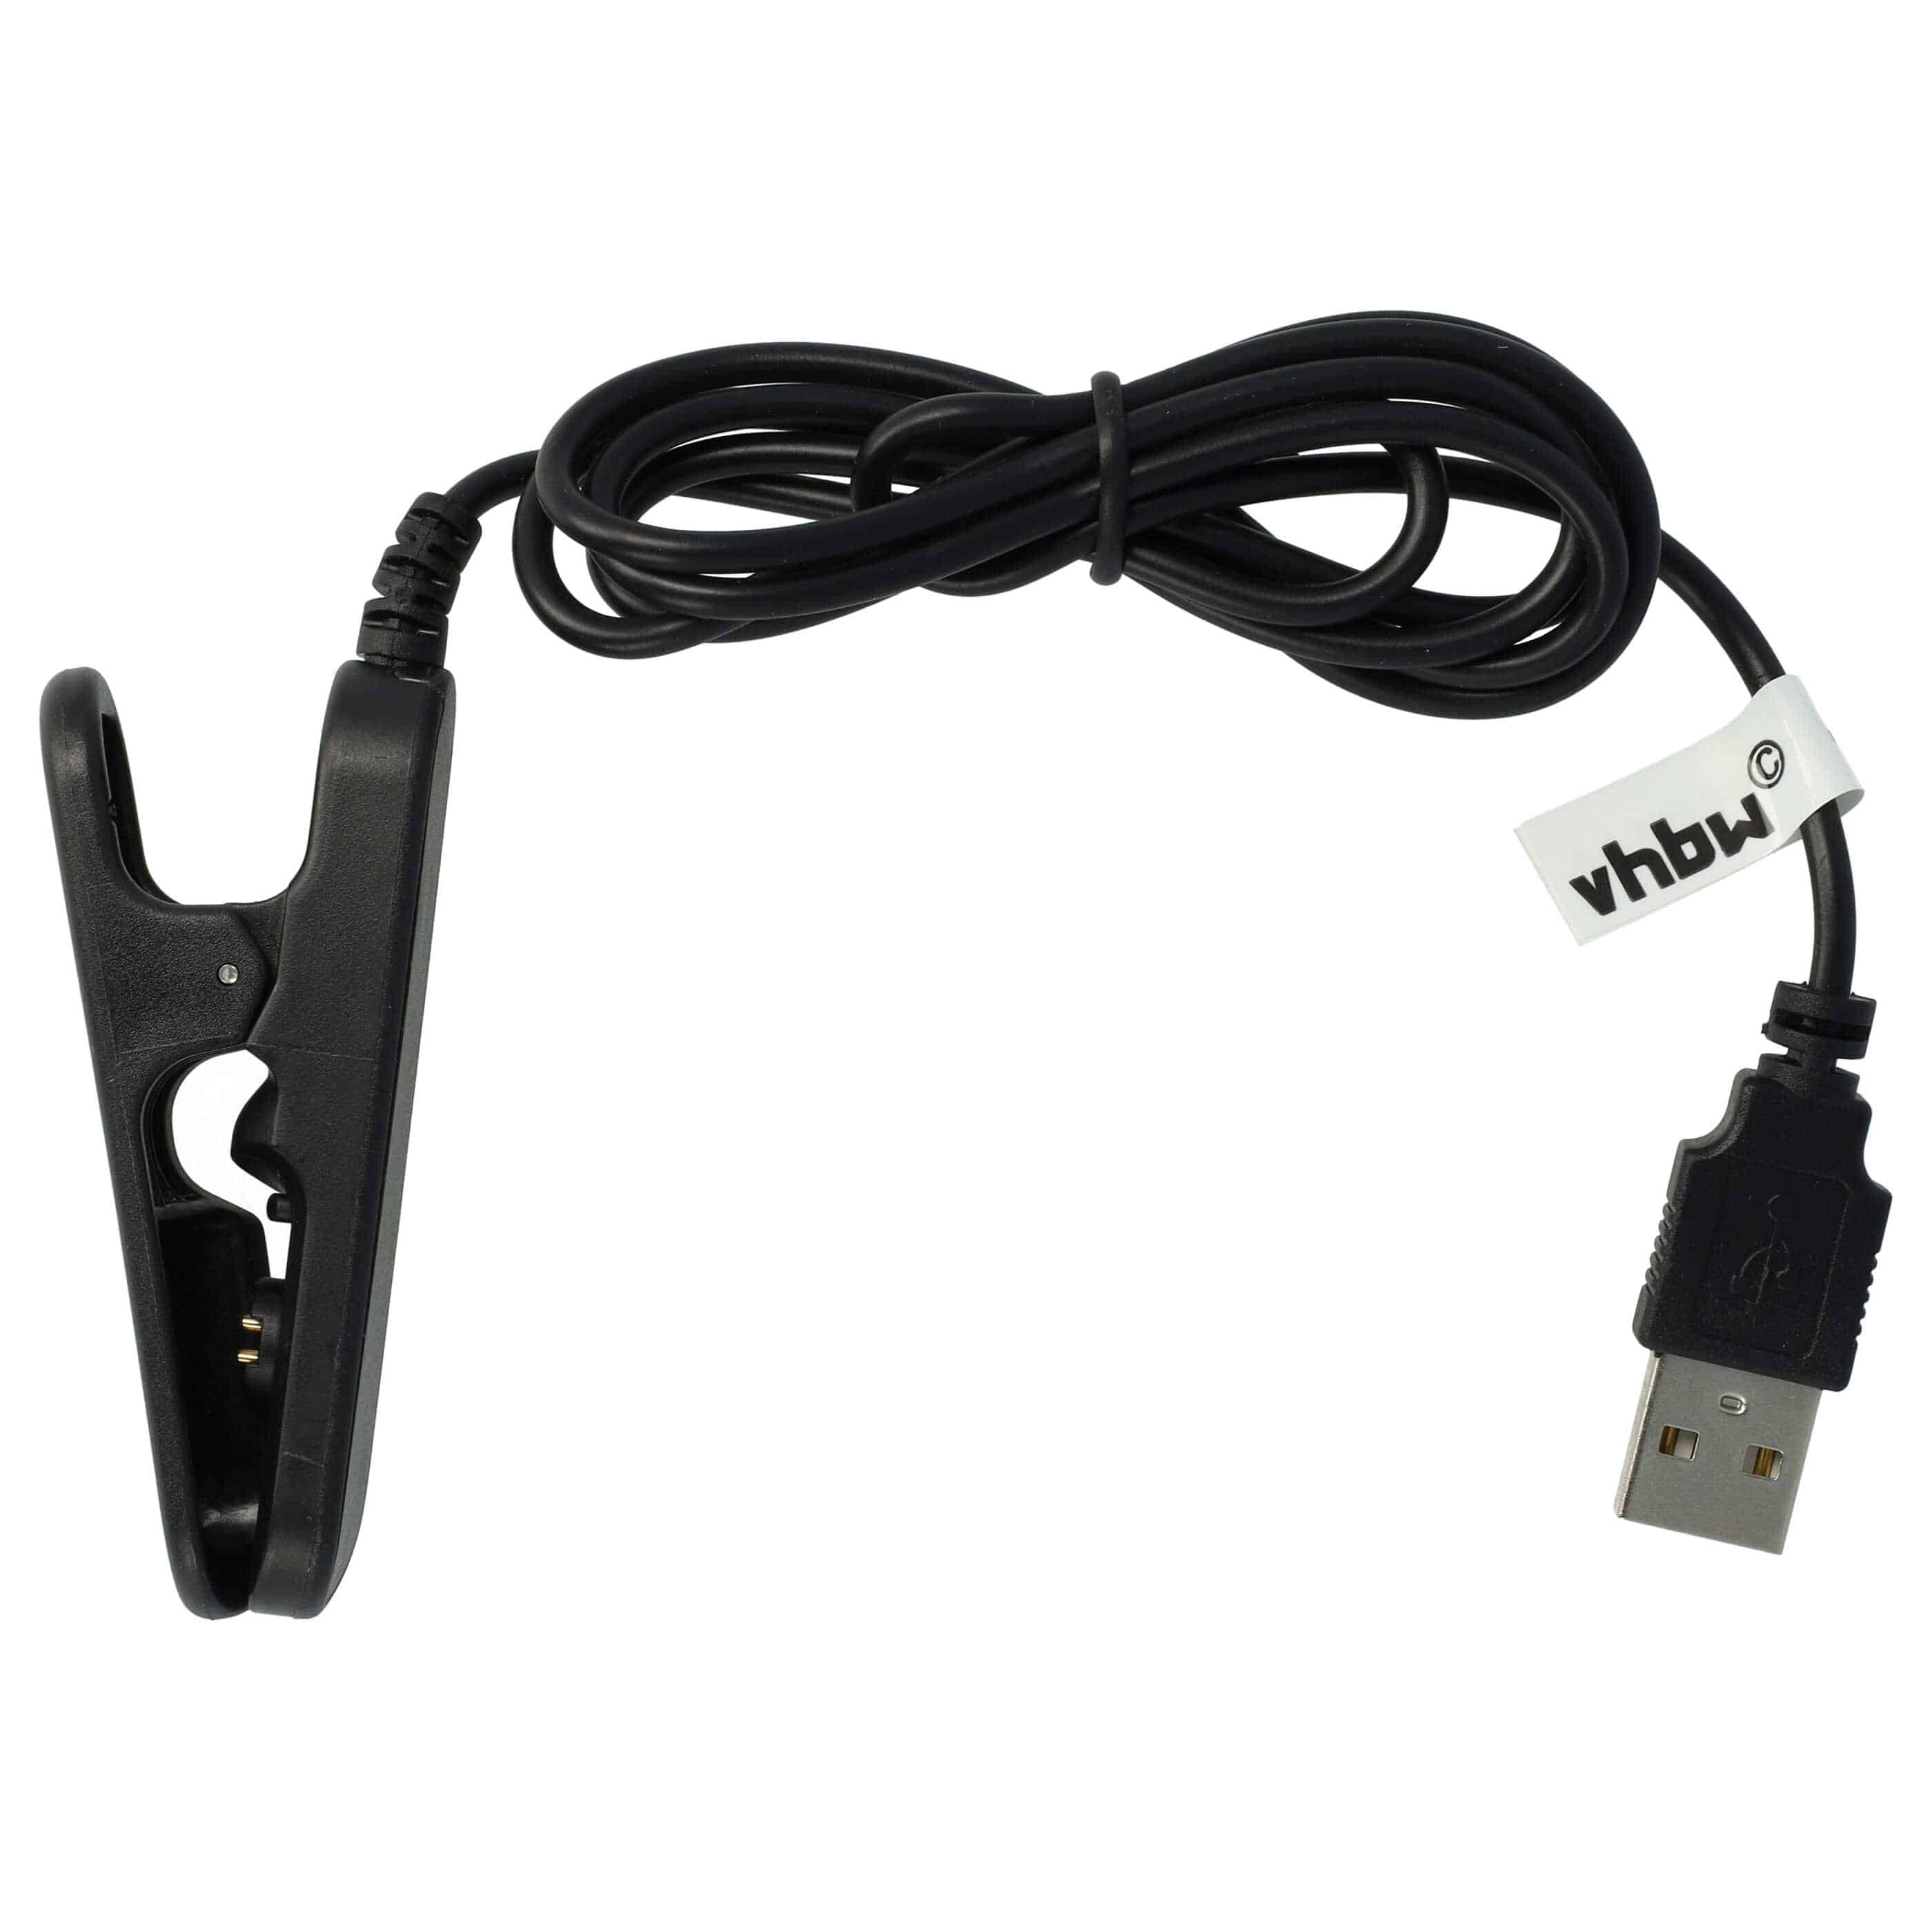 Cable de carga USB para smartwatch Polar V800 - negro 100 cm